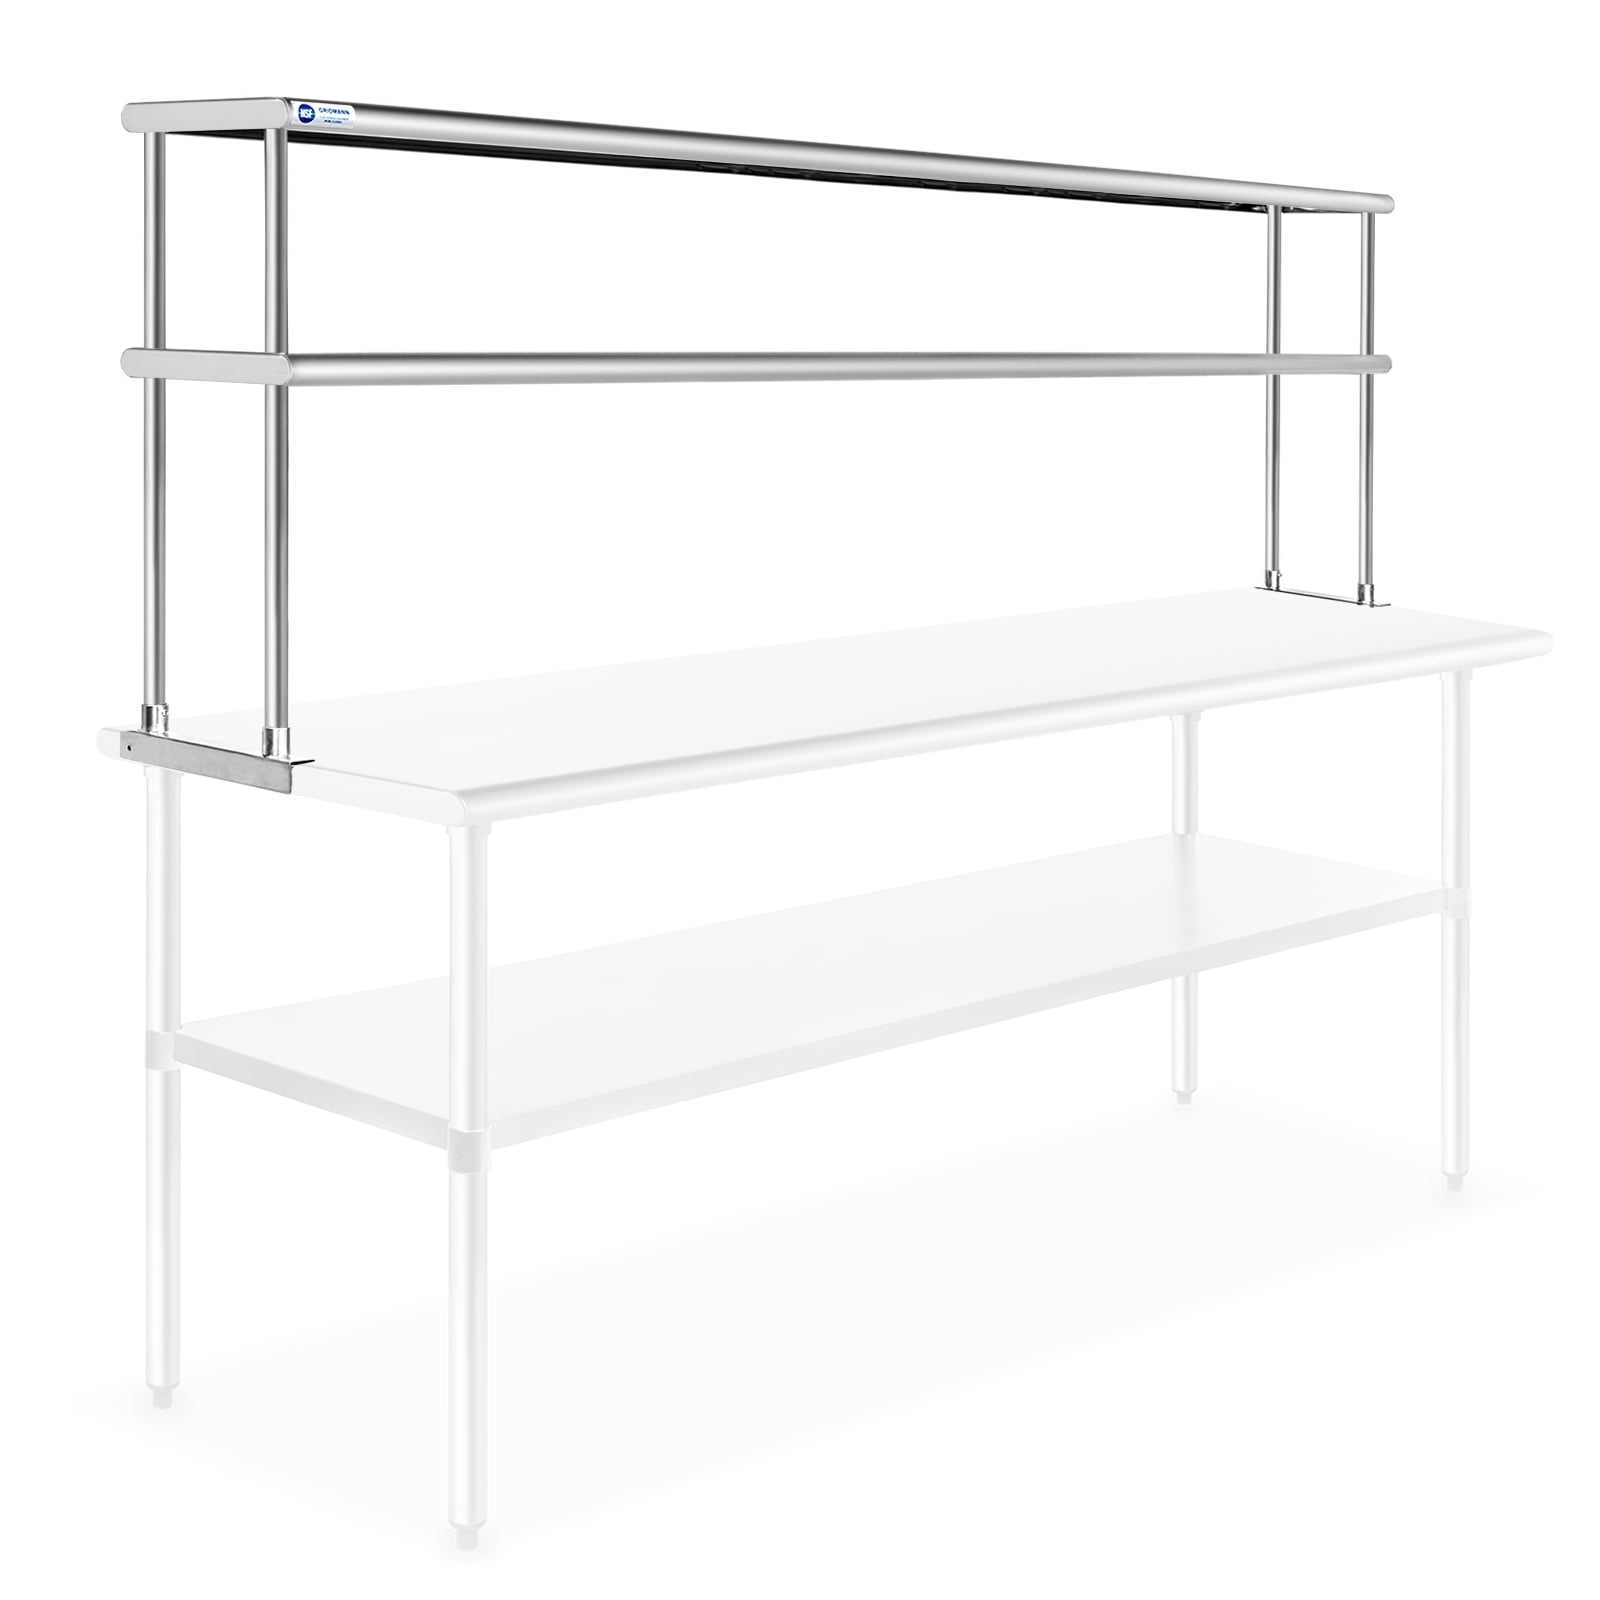 Top Mount 14 x 36 Stainless Steel Adjustable Double Overshelf for Work Table